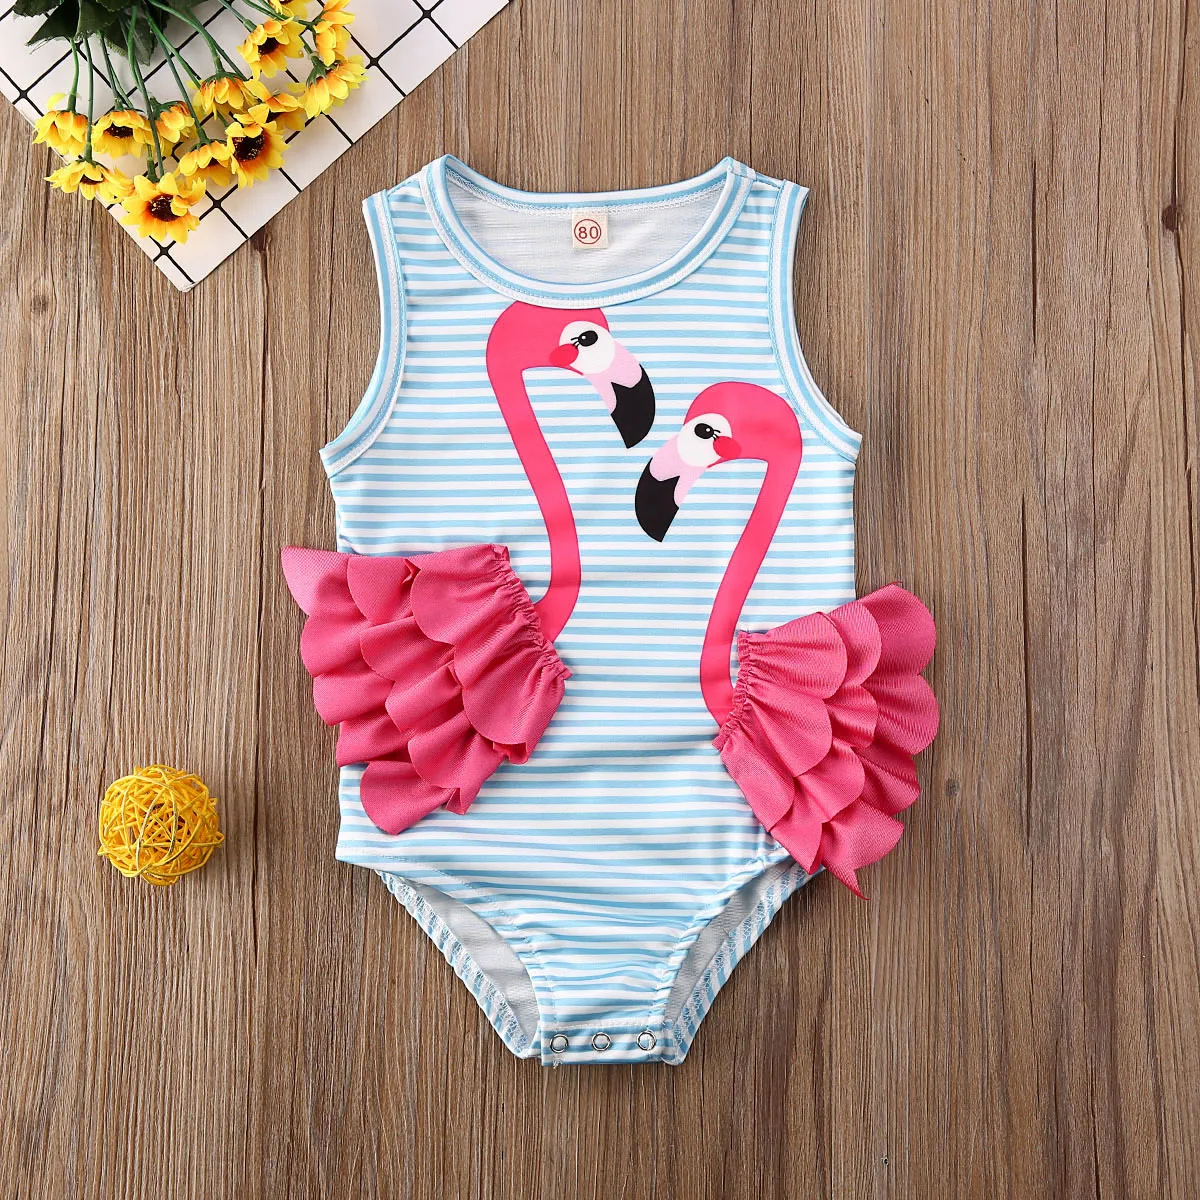 

Baby Girl Flamingo Print Swimsuit Striped Swimwear 6M-4T Toddler Kids Summer Casual Sleeveless Bathing Suit 2022 New